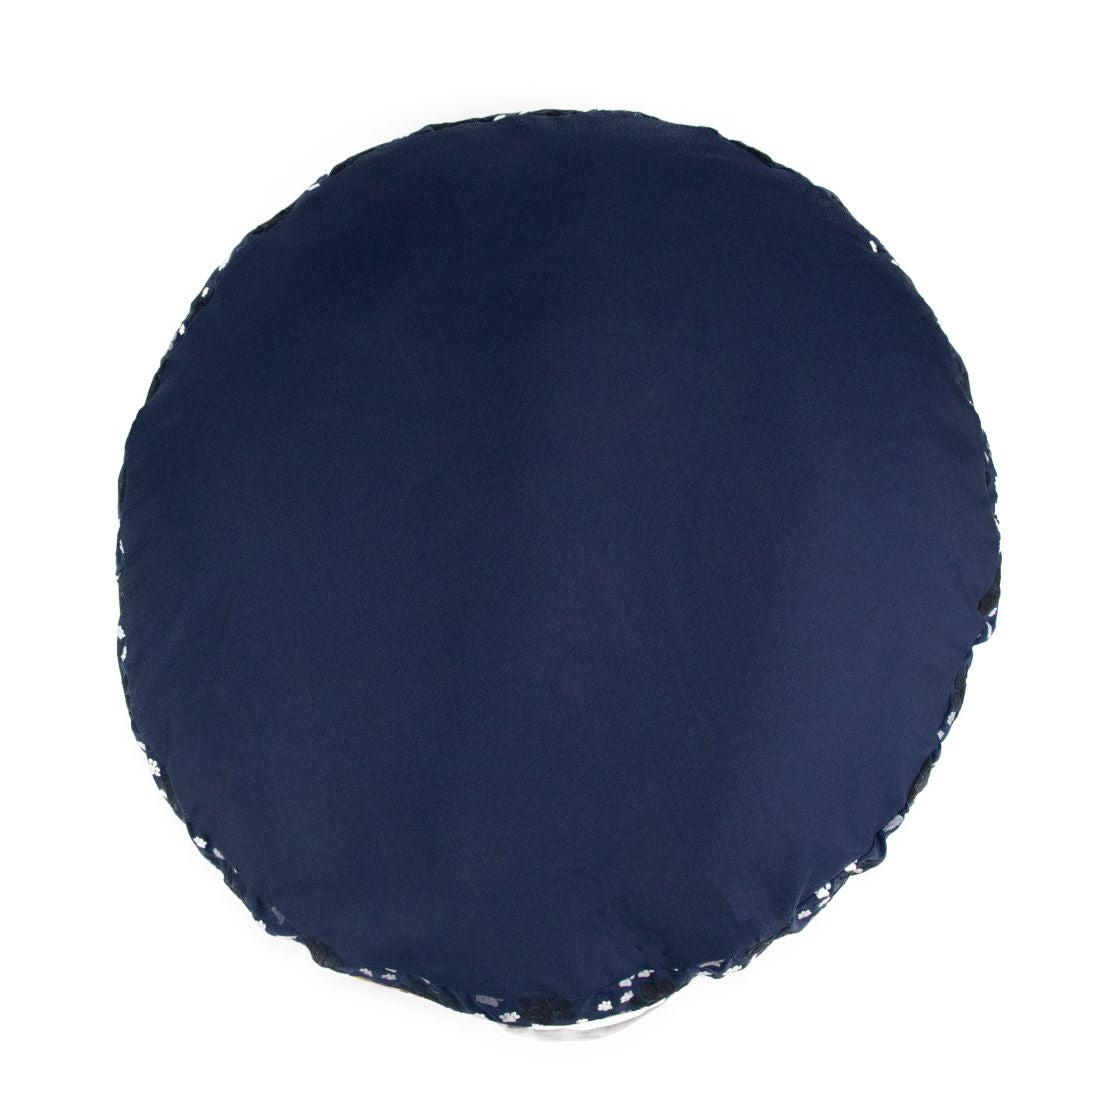 Round Cushion Mattress Cover - Ensign Blue